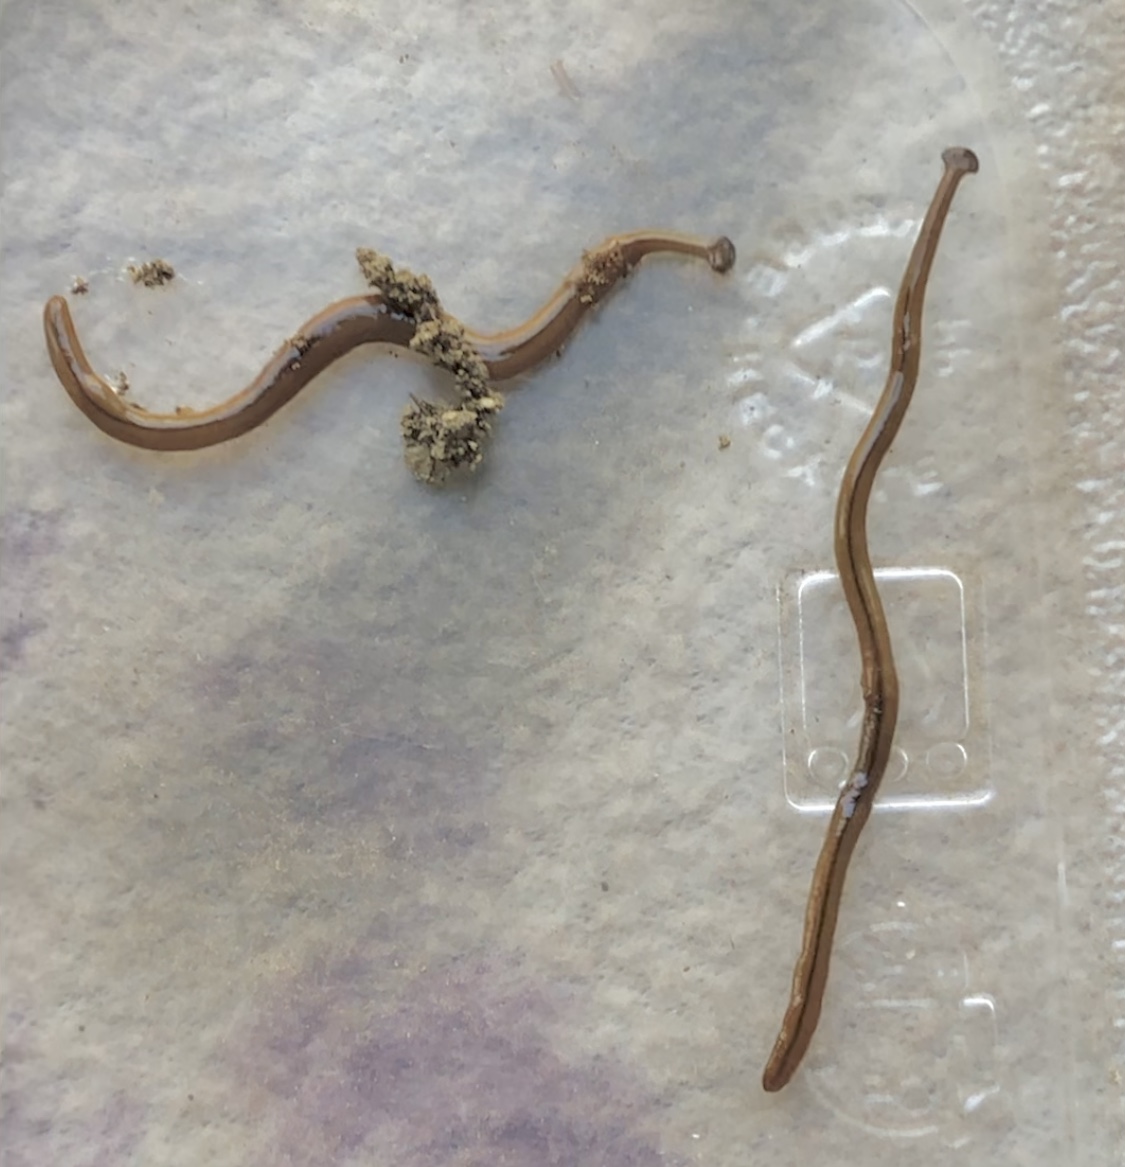 Invasive, Toxic Hammerhead Worms Found in Rhode Island - ecoRI News